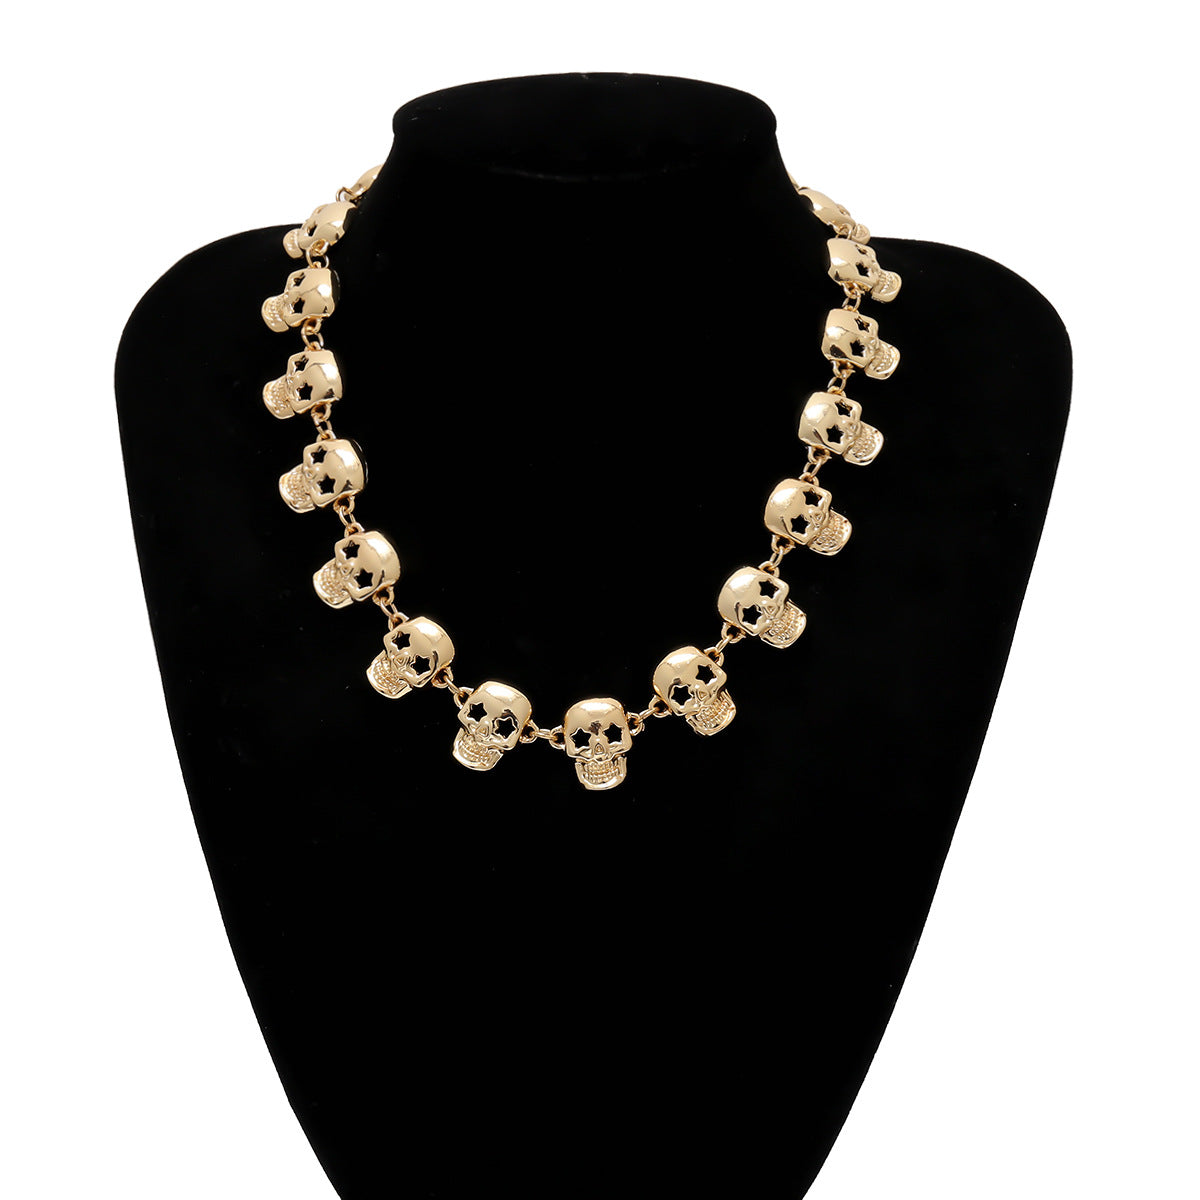 Skull geometric necklace